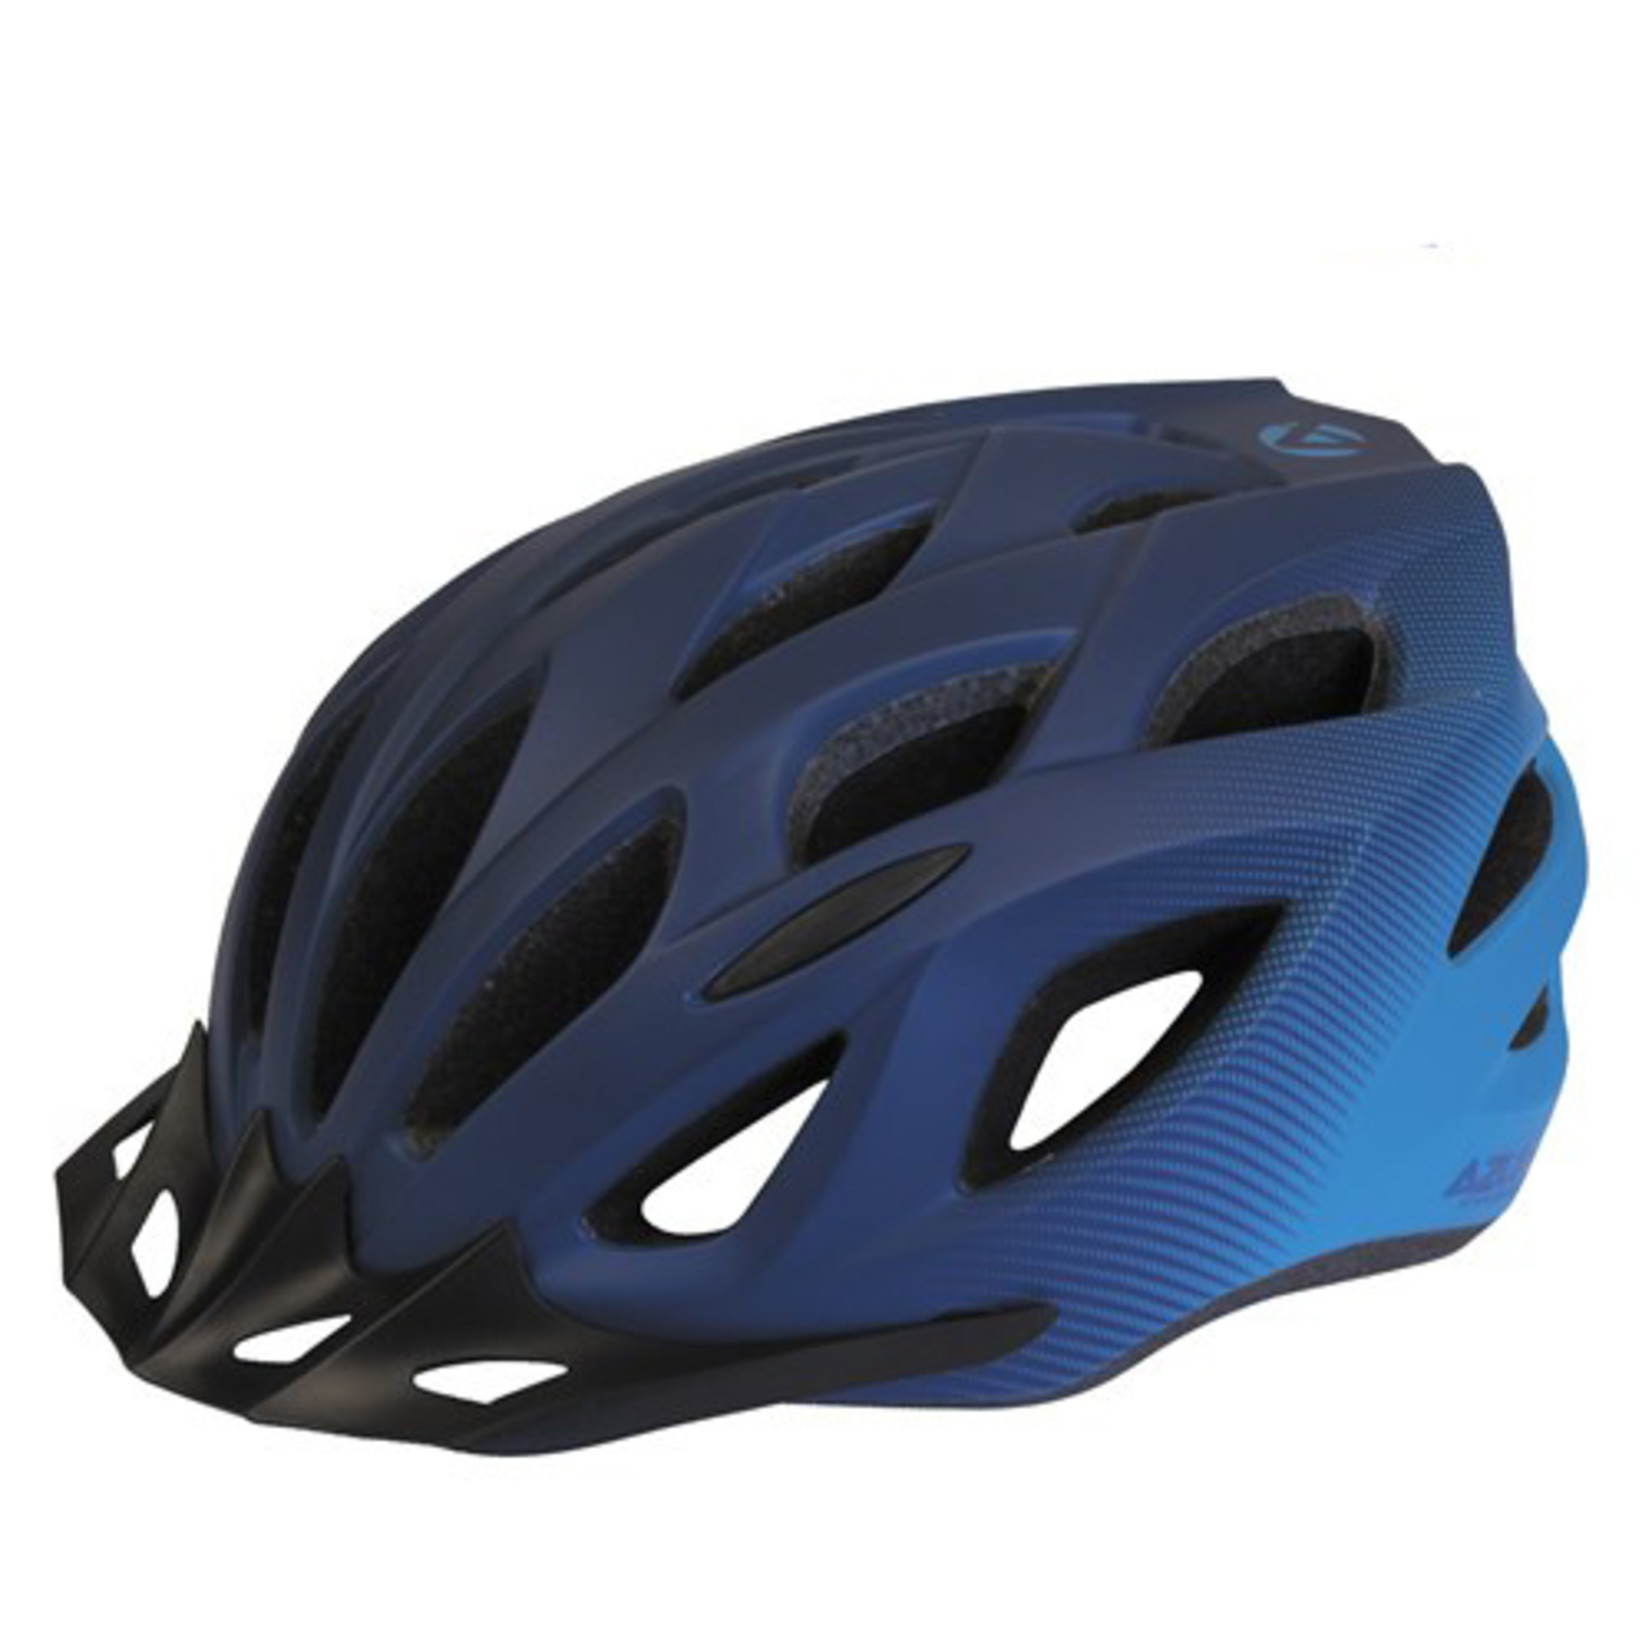 Azur Azur Bike Helmet - L61 Series Dial Comfort Fit System - Satin Blue/Sky Fade